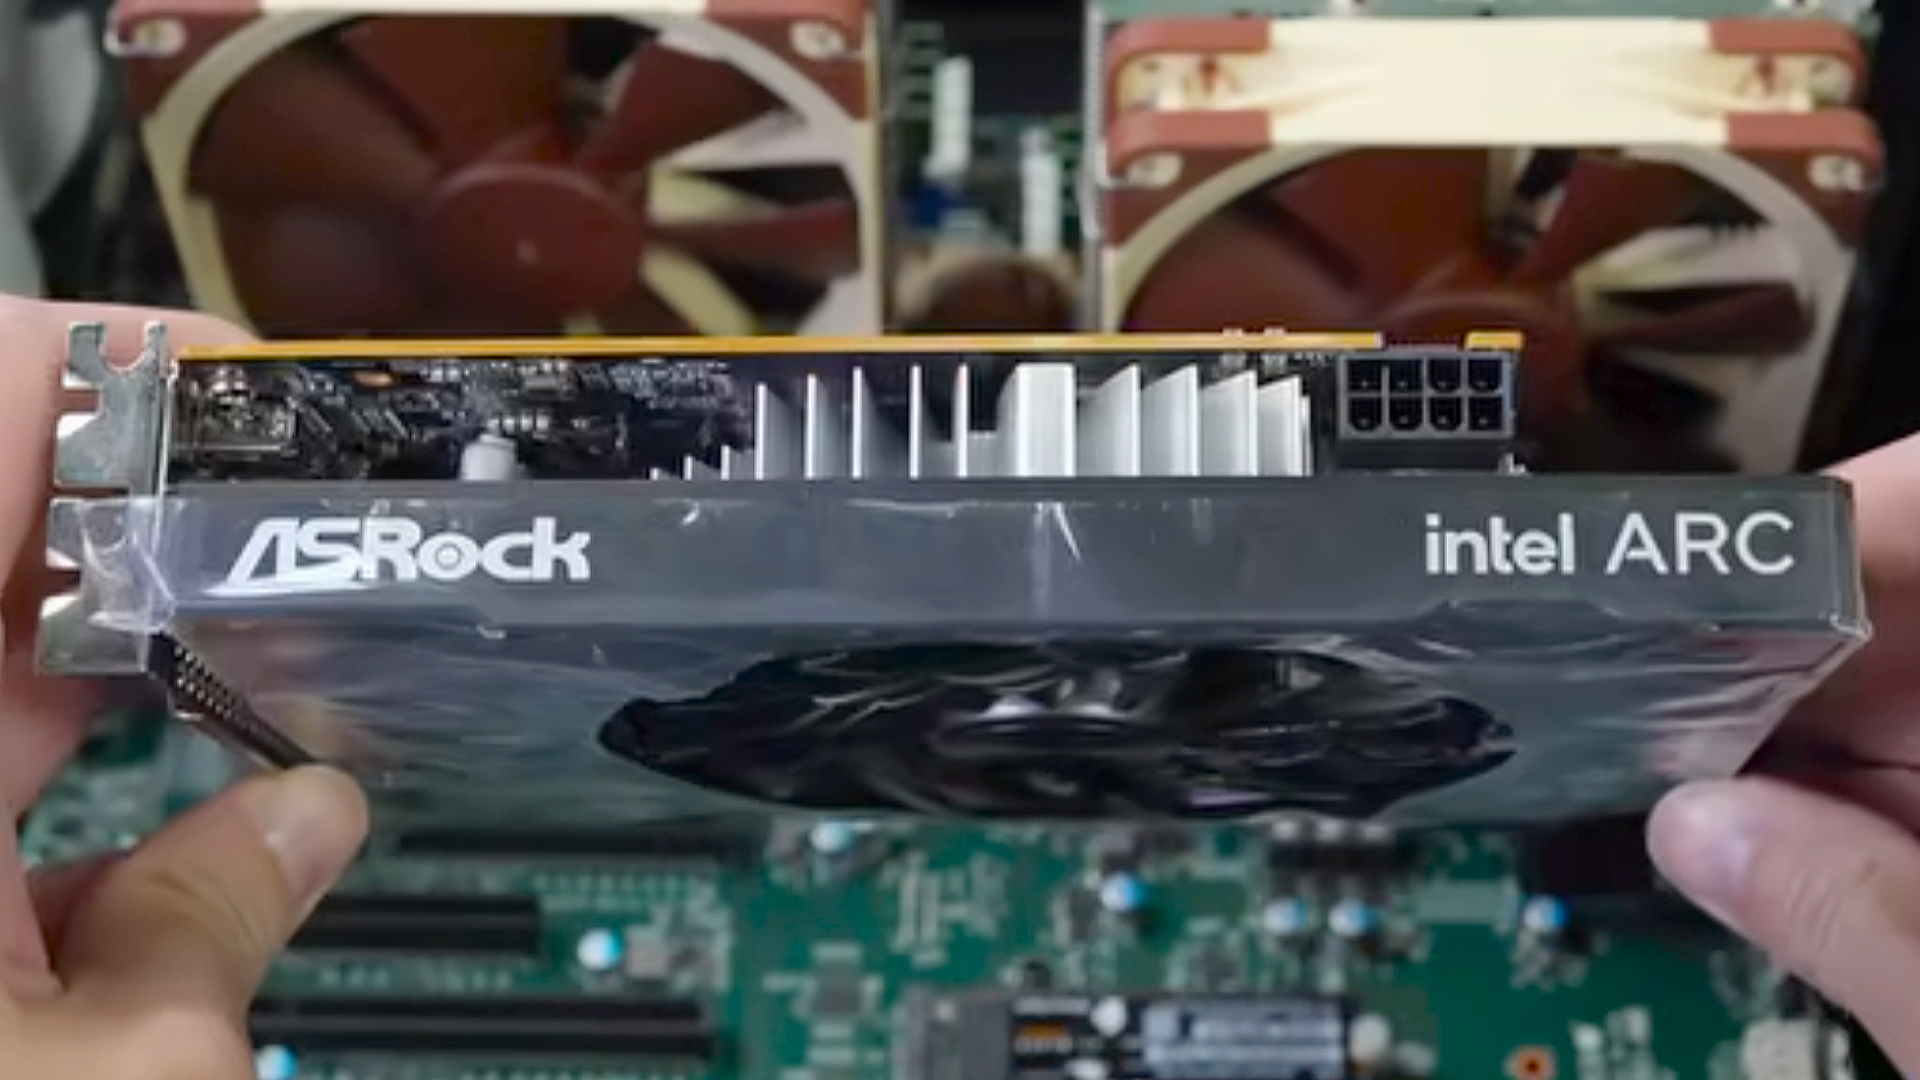 Sorry AMD, looks like ASRock is cooking up an Intel Arc GPU